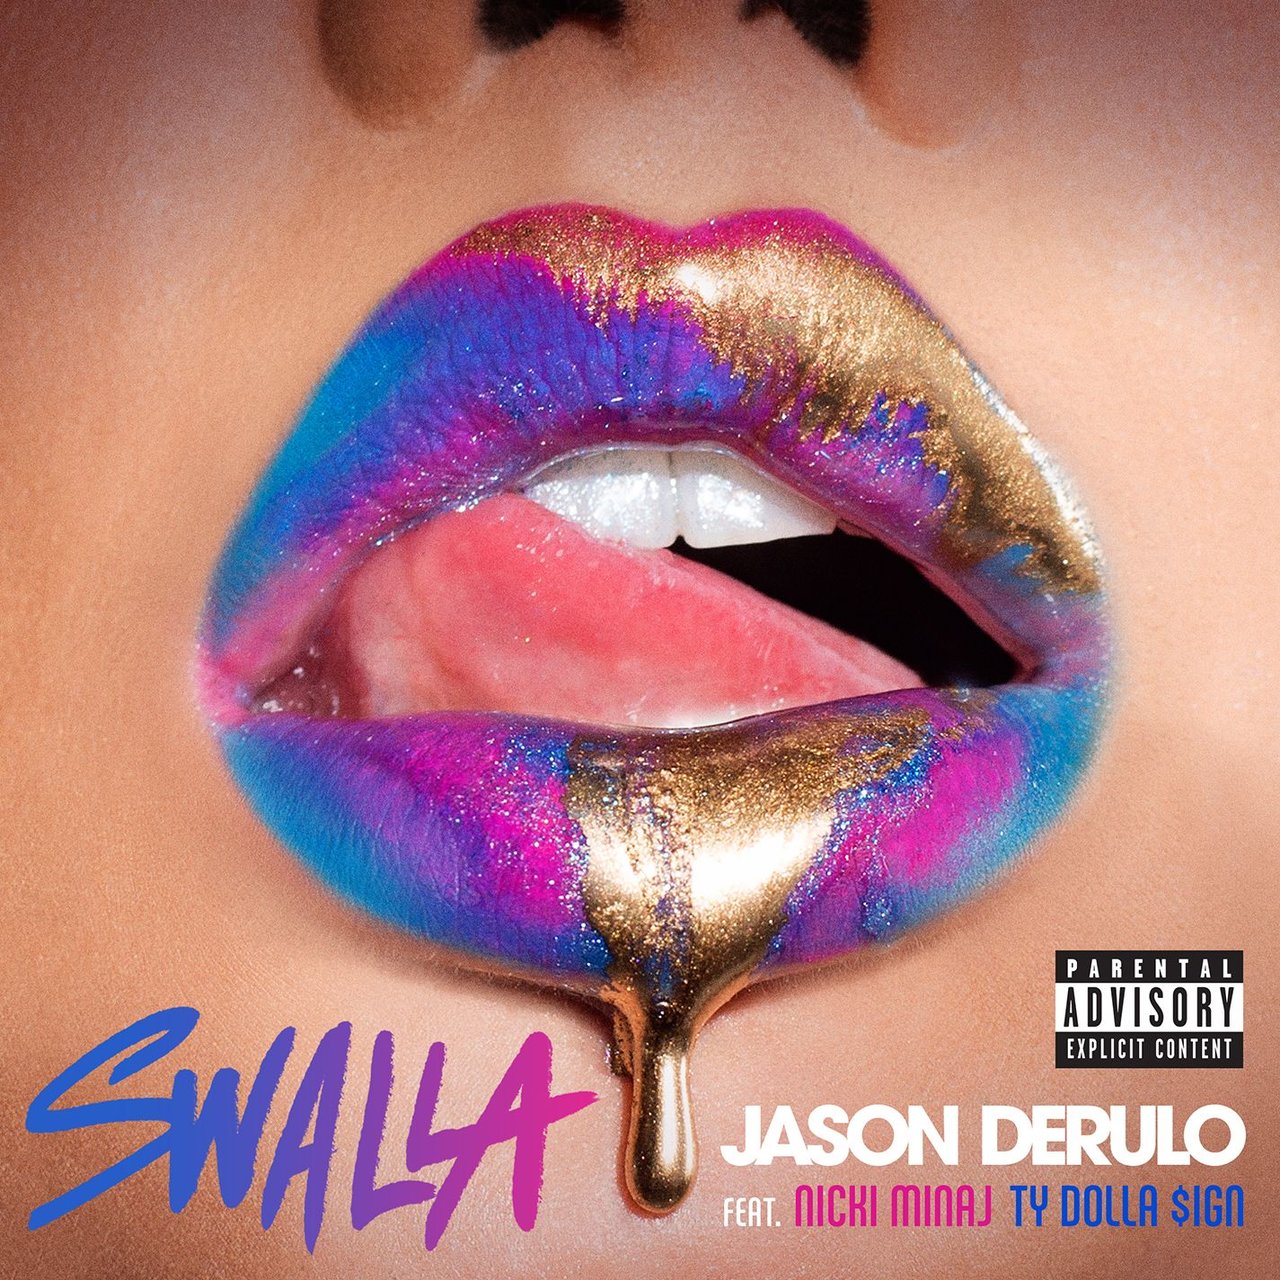 Jason Derulo - Swalla (ft. Nicki Minaj and Ty Dolla Sign) (Cover)